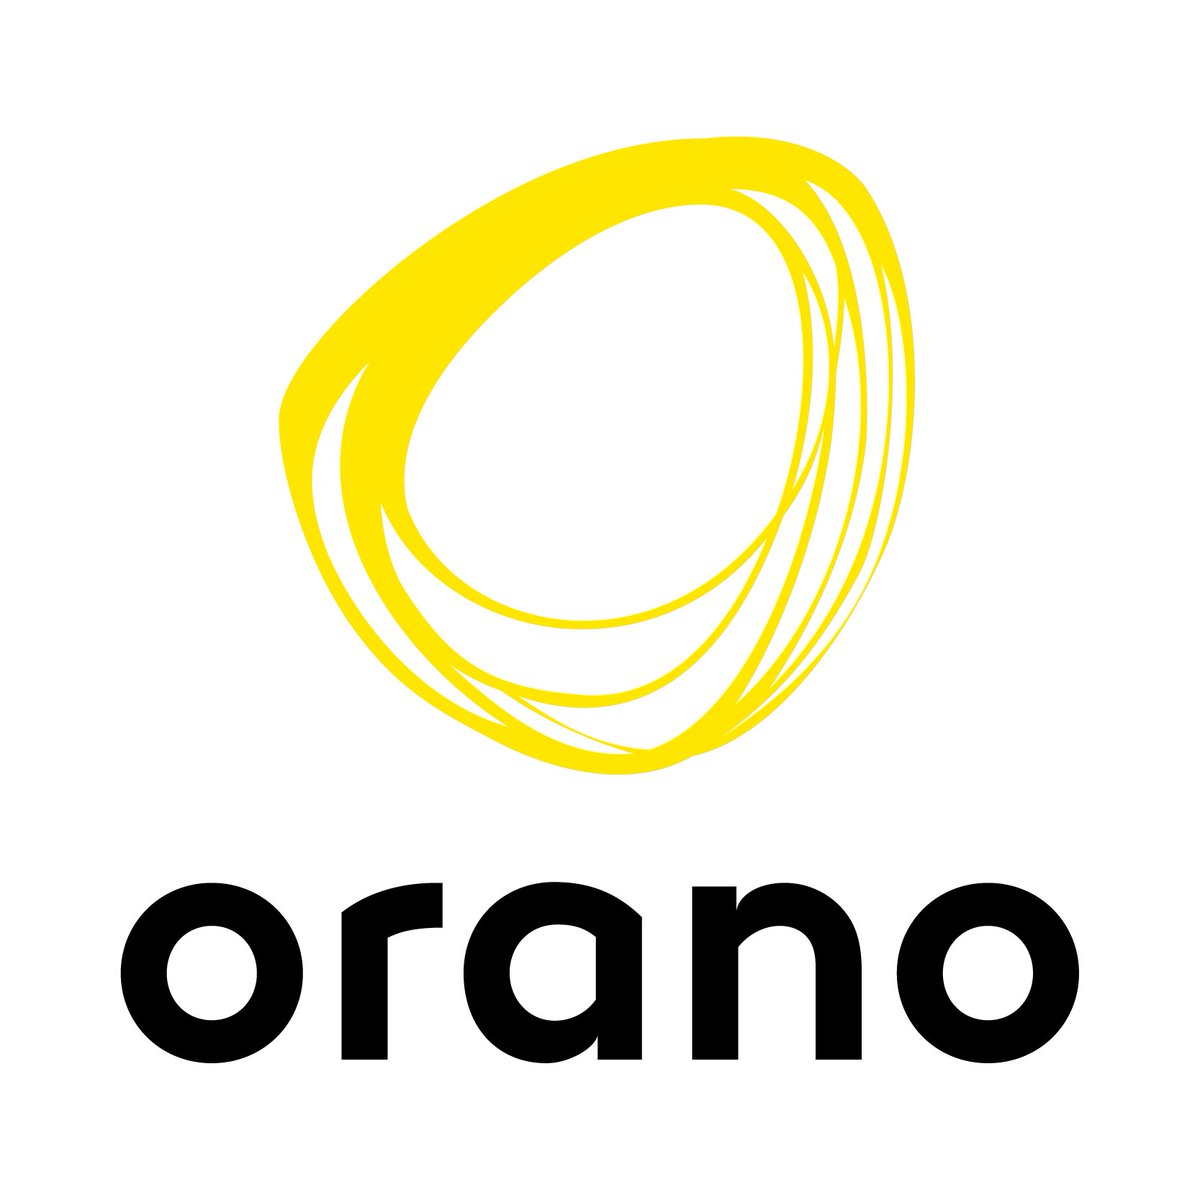 Logo ORANO